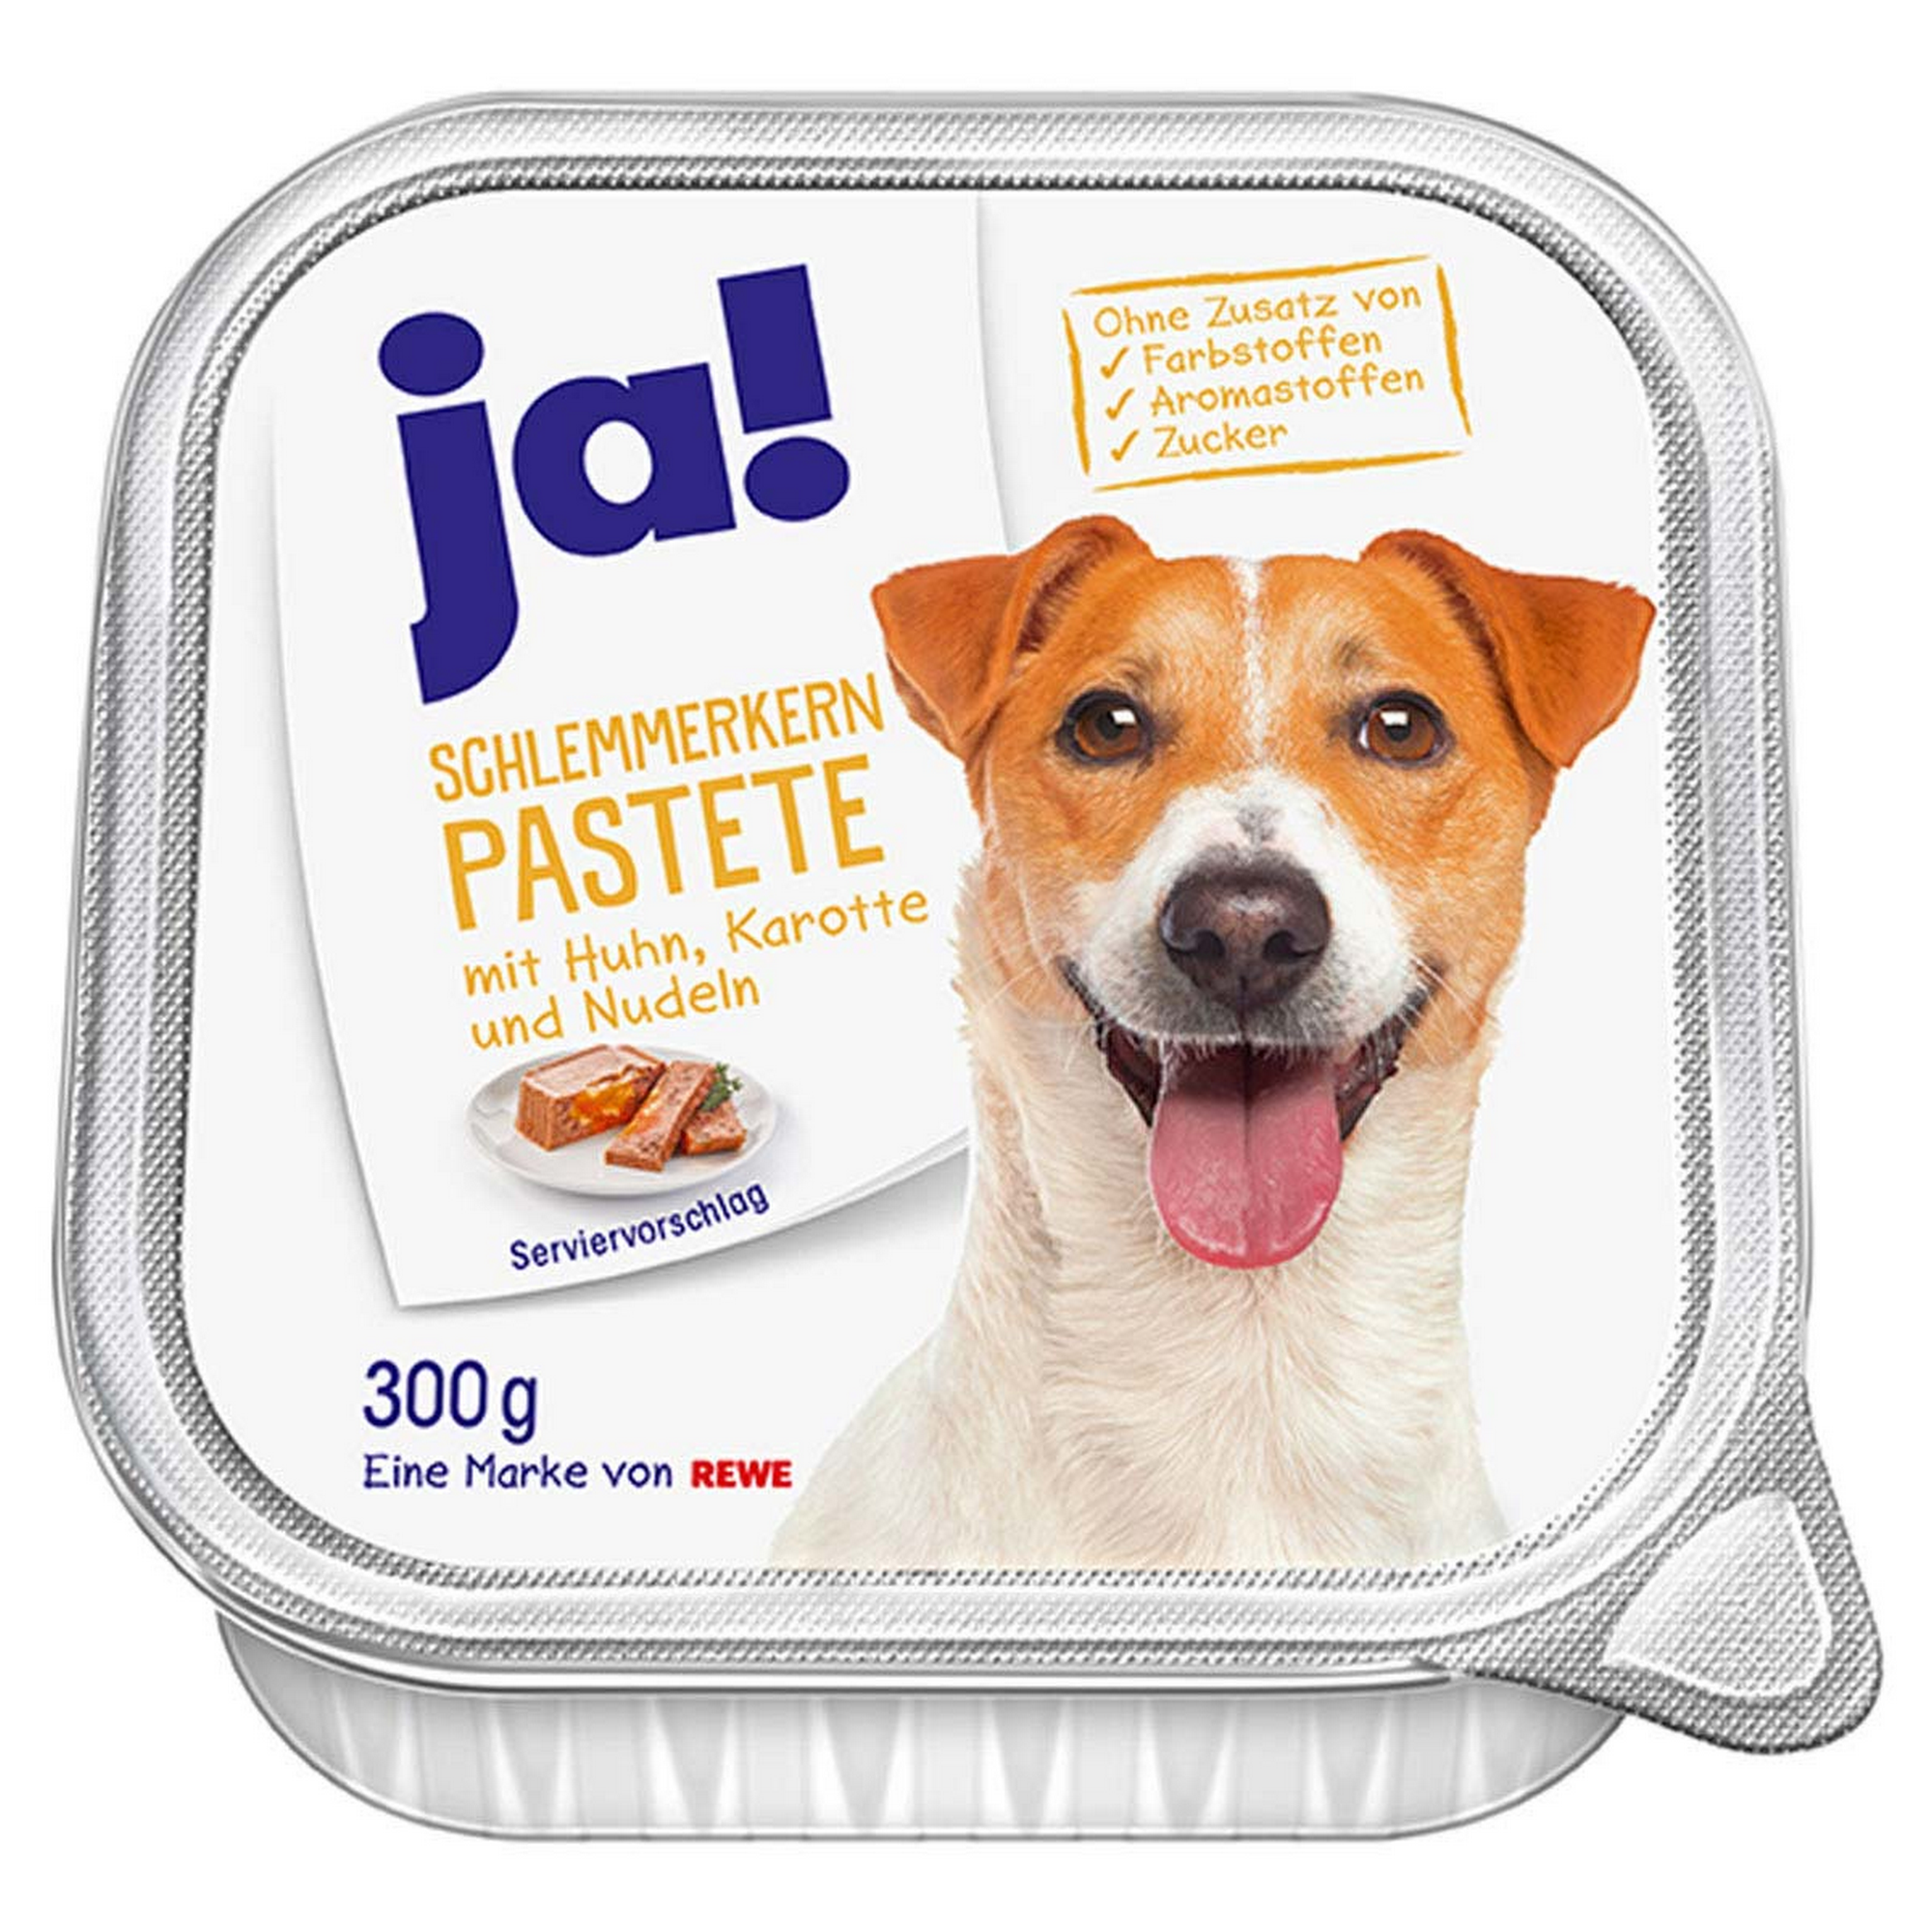 Hundnassfutter 'Schlemmerkern Pastete' Adult, mit Huhn, Karotte und Nudeln, 300 g + product picture